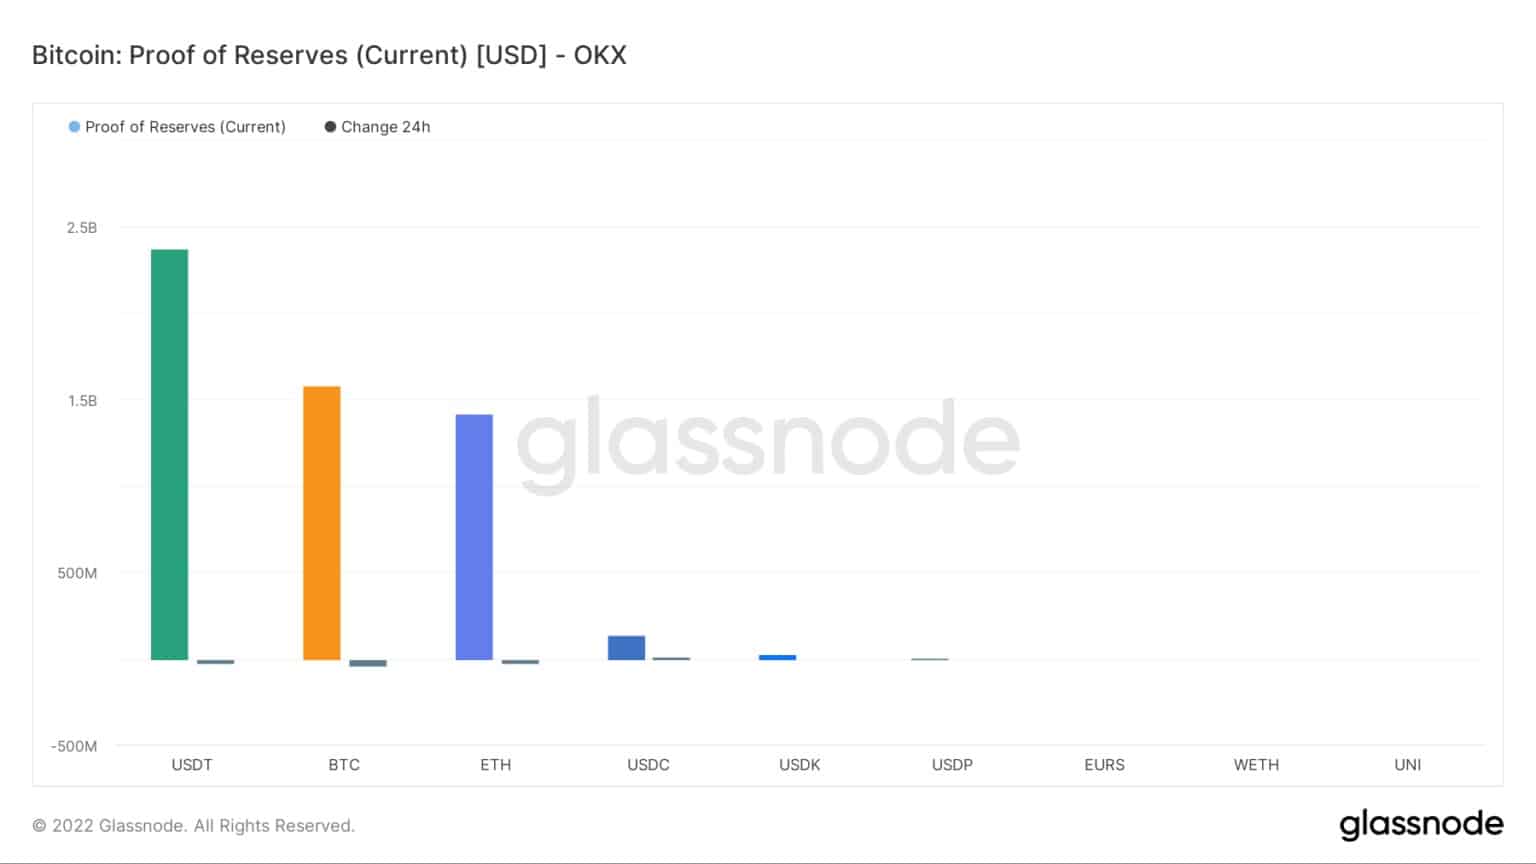 Proof of reserves - OKX / Quelle: Glassnode